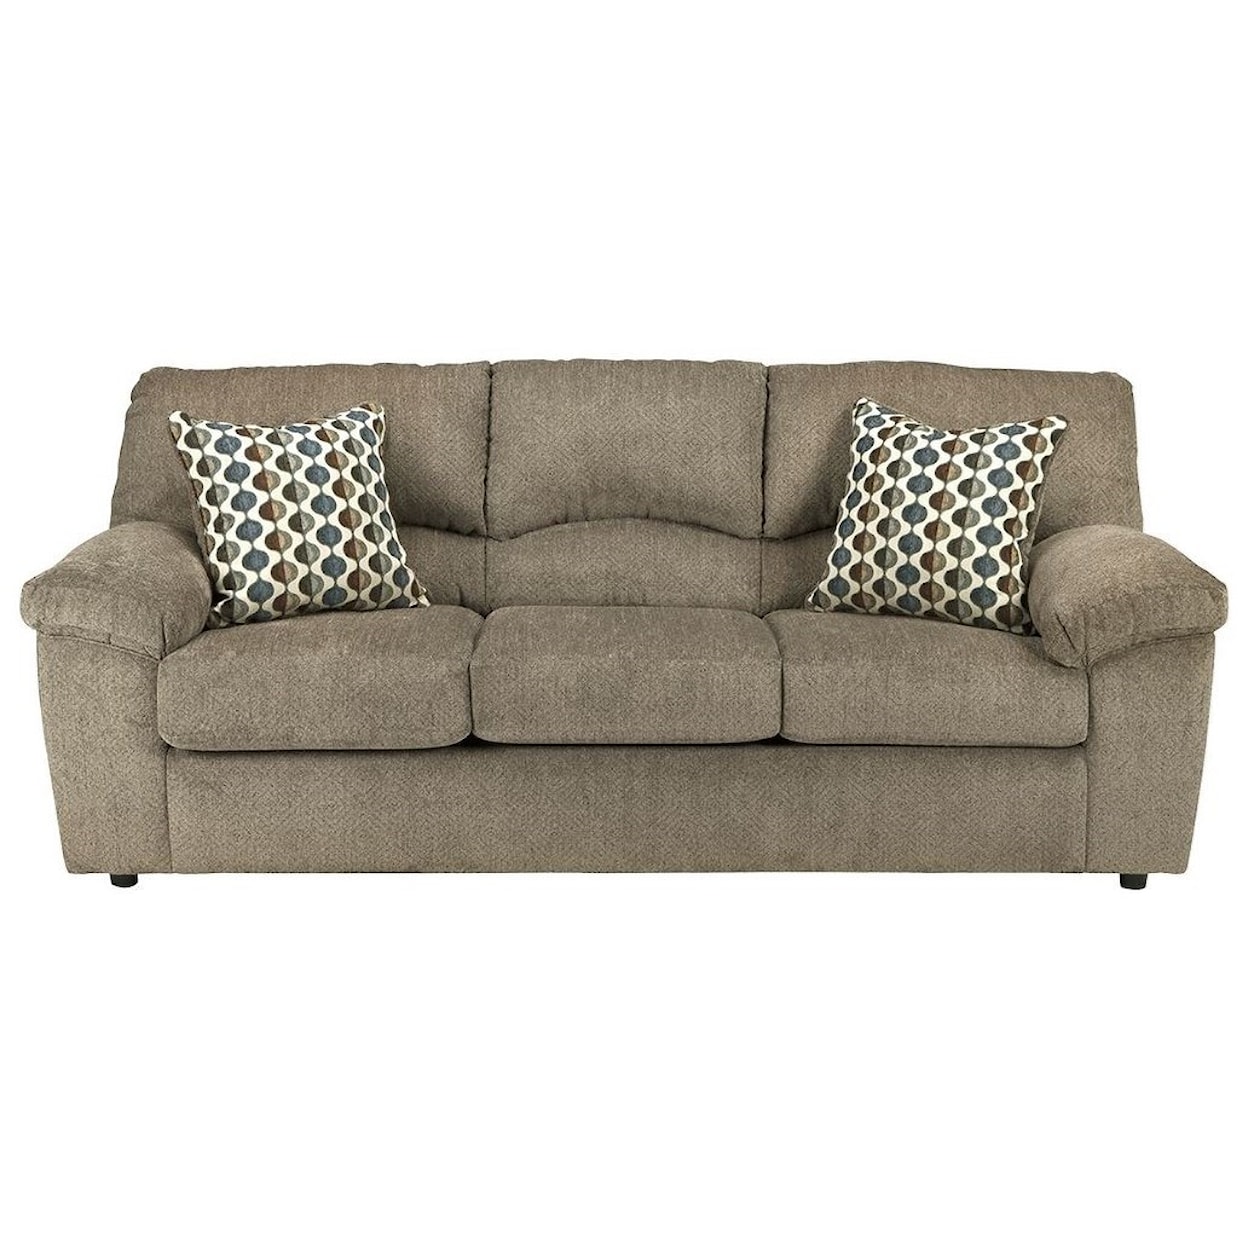 Ashley Furniture Signature Design Pindall Sofa